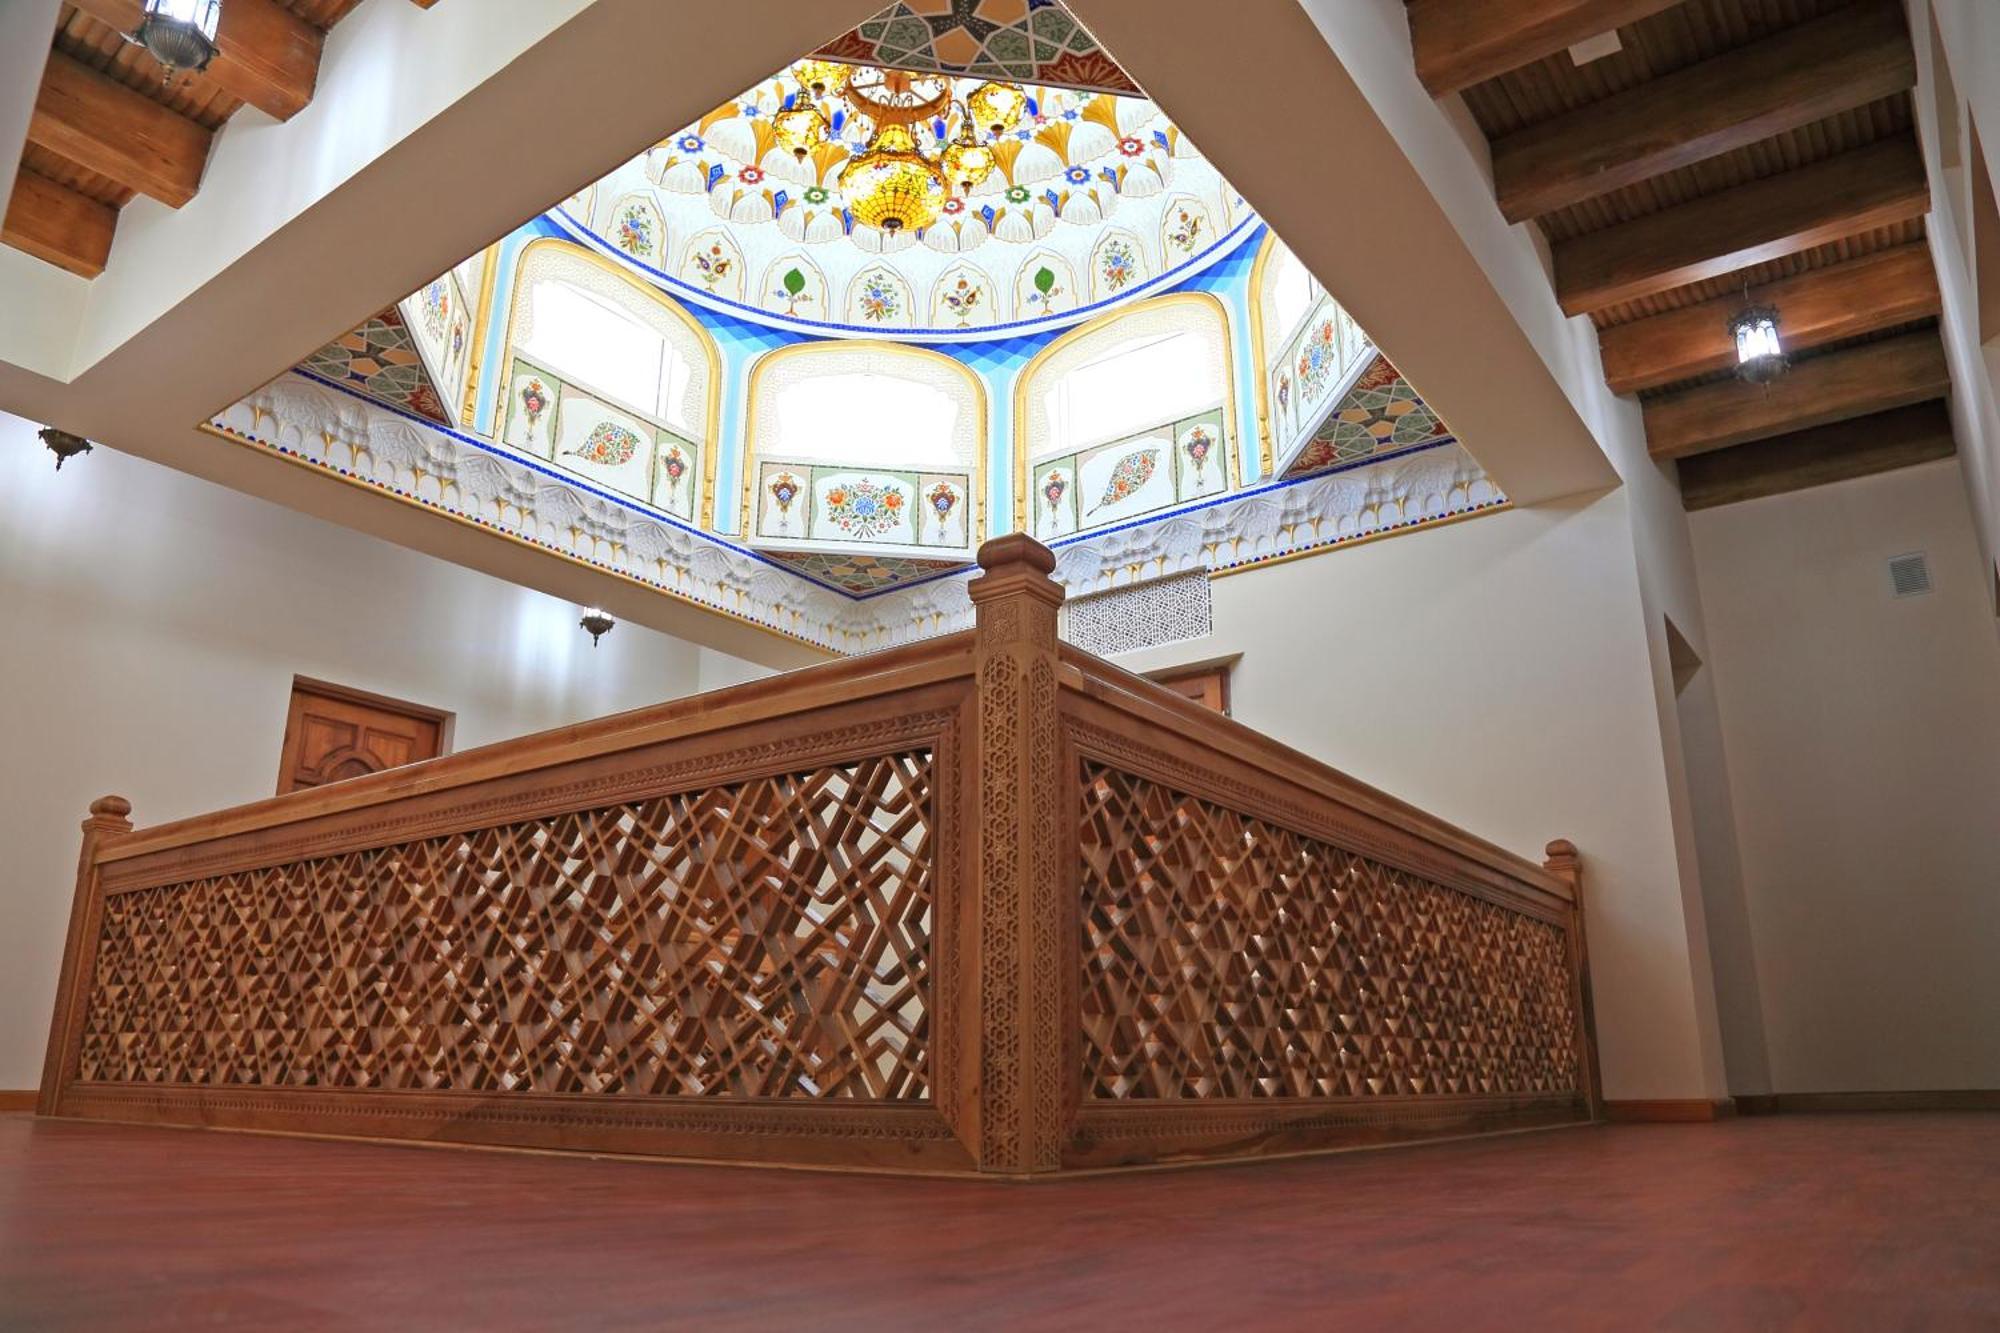 Devon Begi Heritage Hotel Bukhara Exterior photo